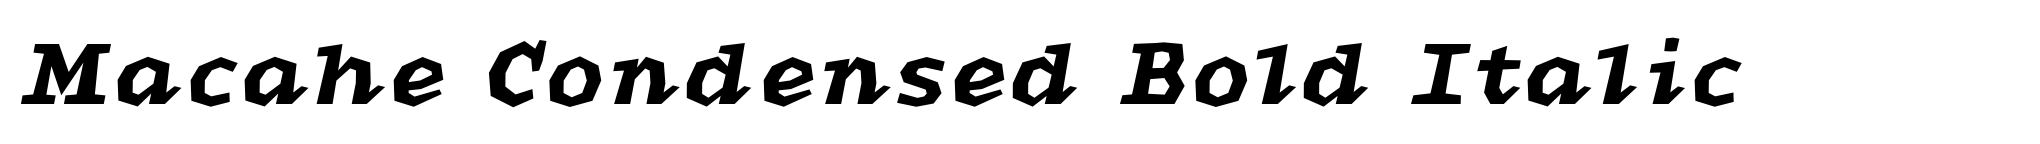 Macahe Condensed Bold Italic image